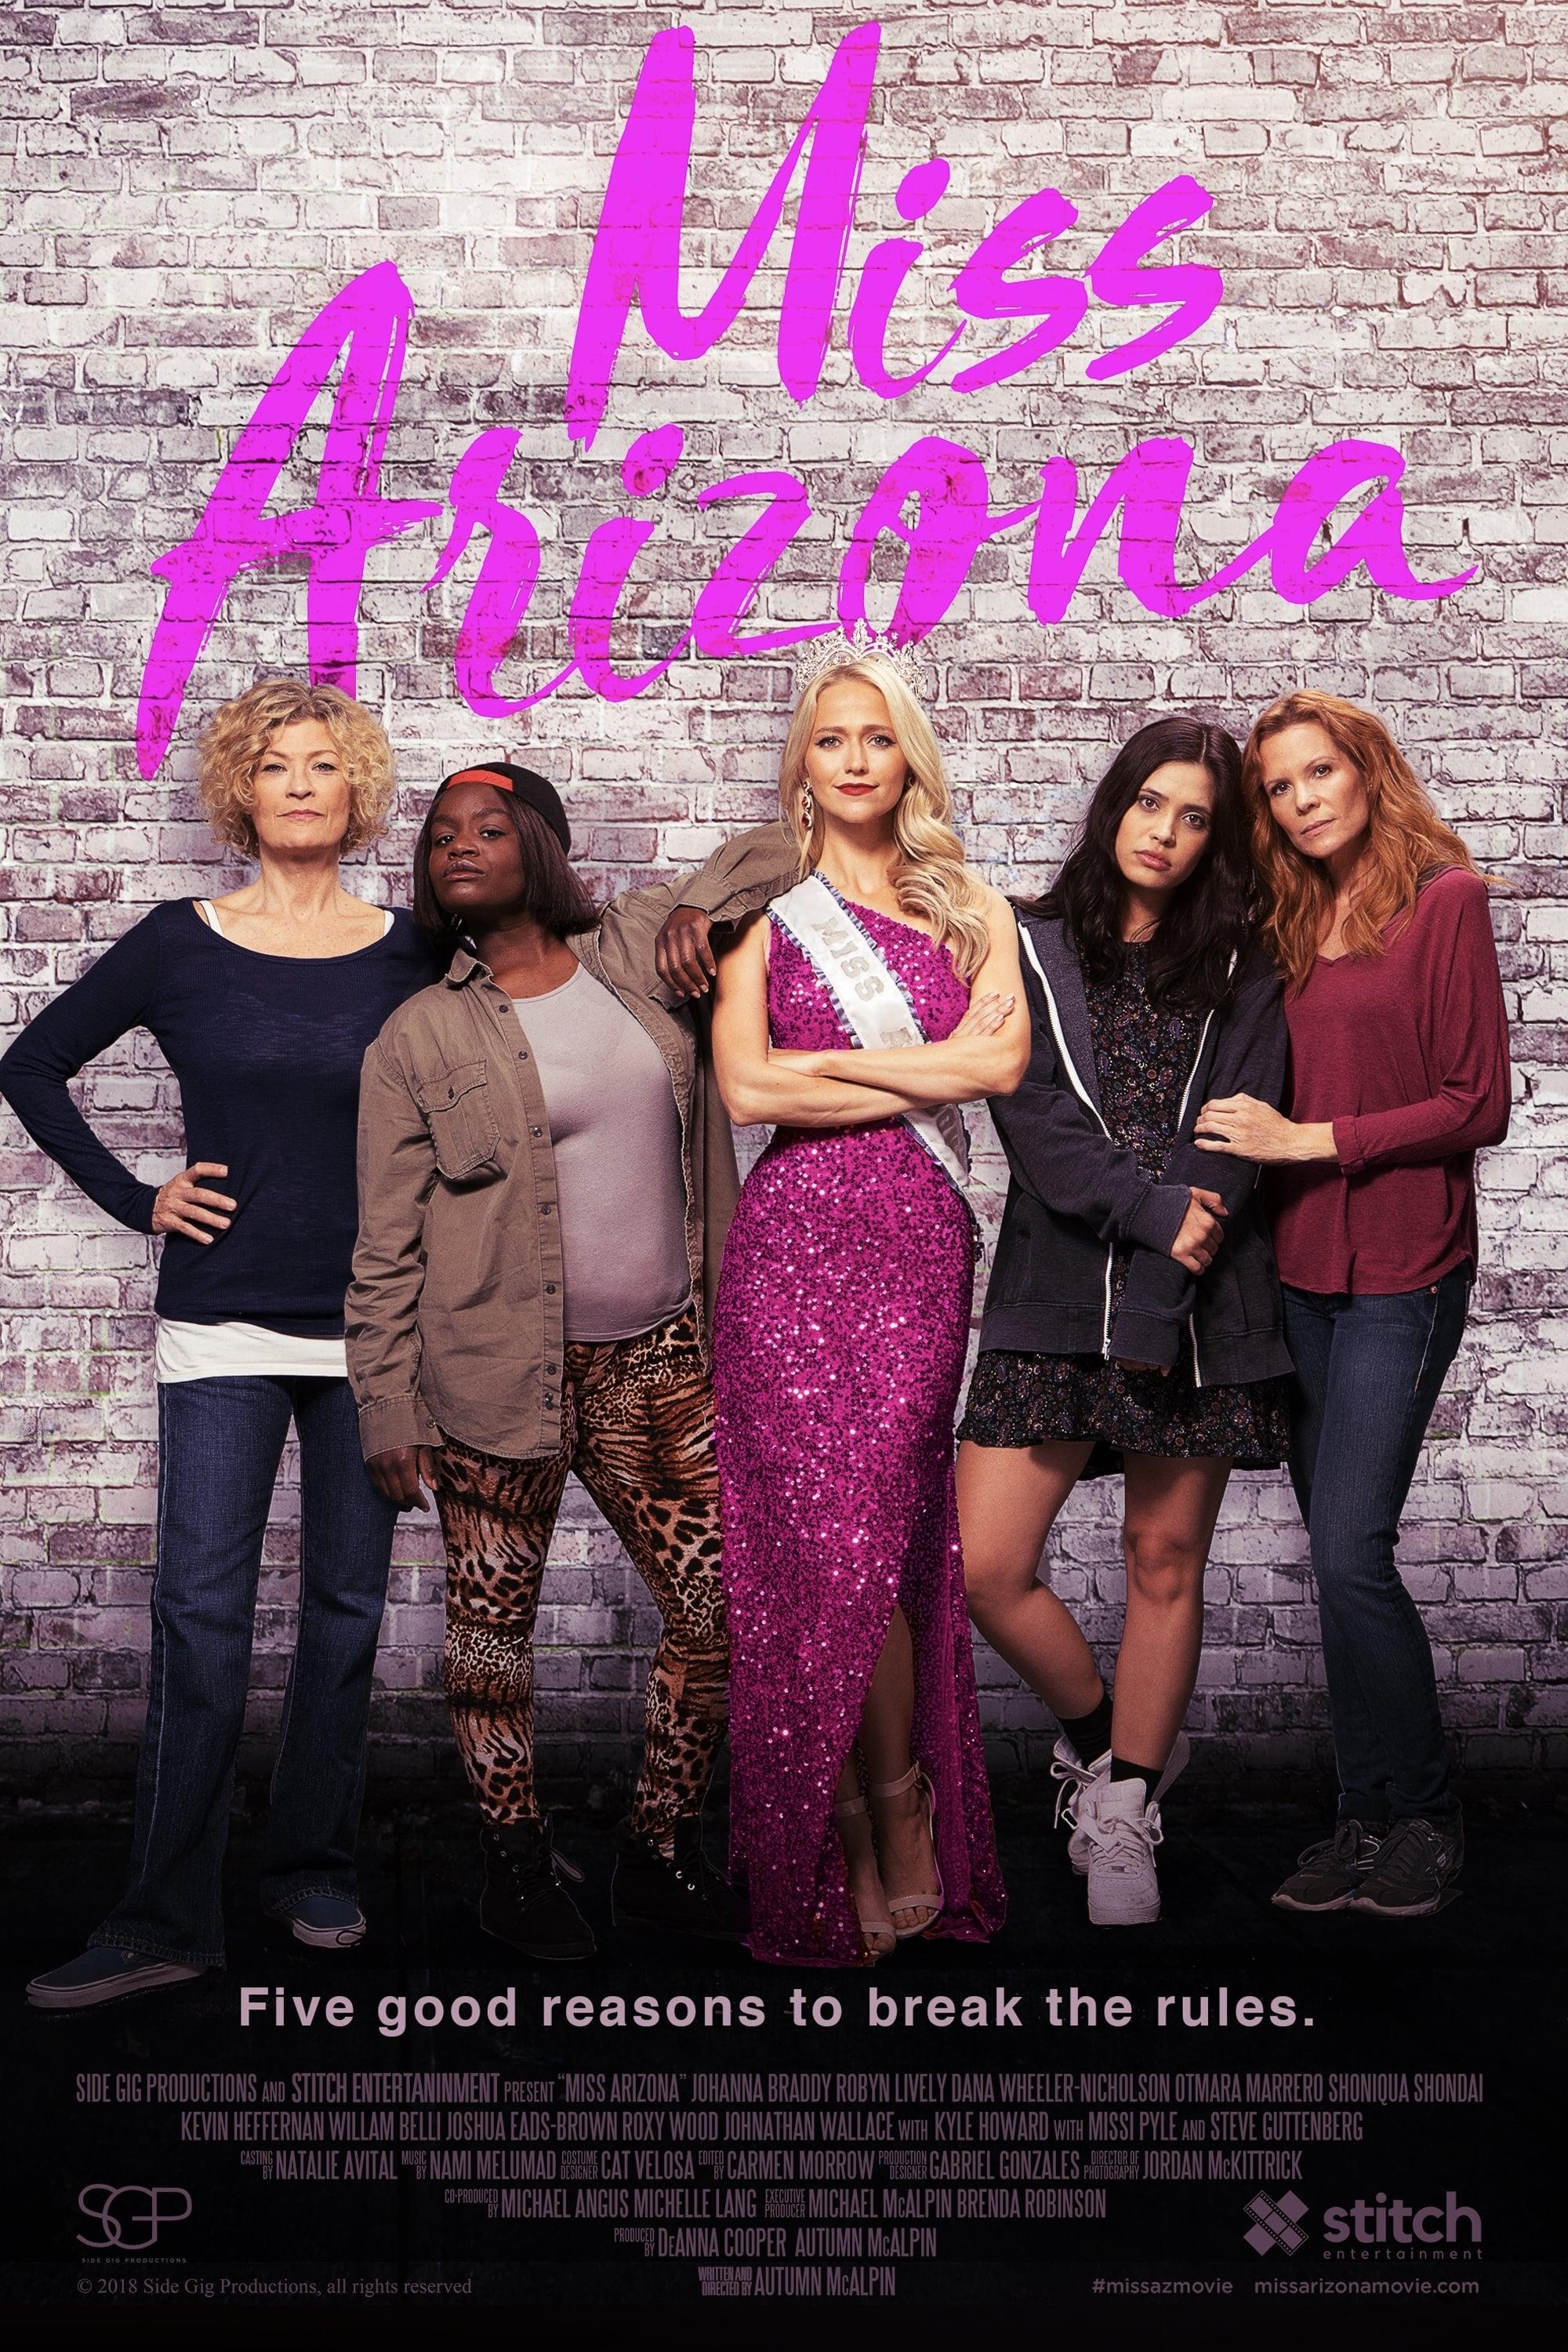 Miss Arizona poster